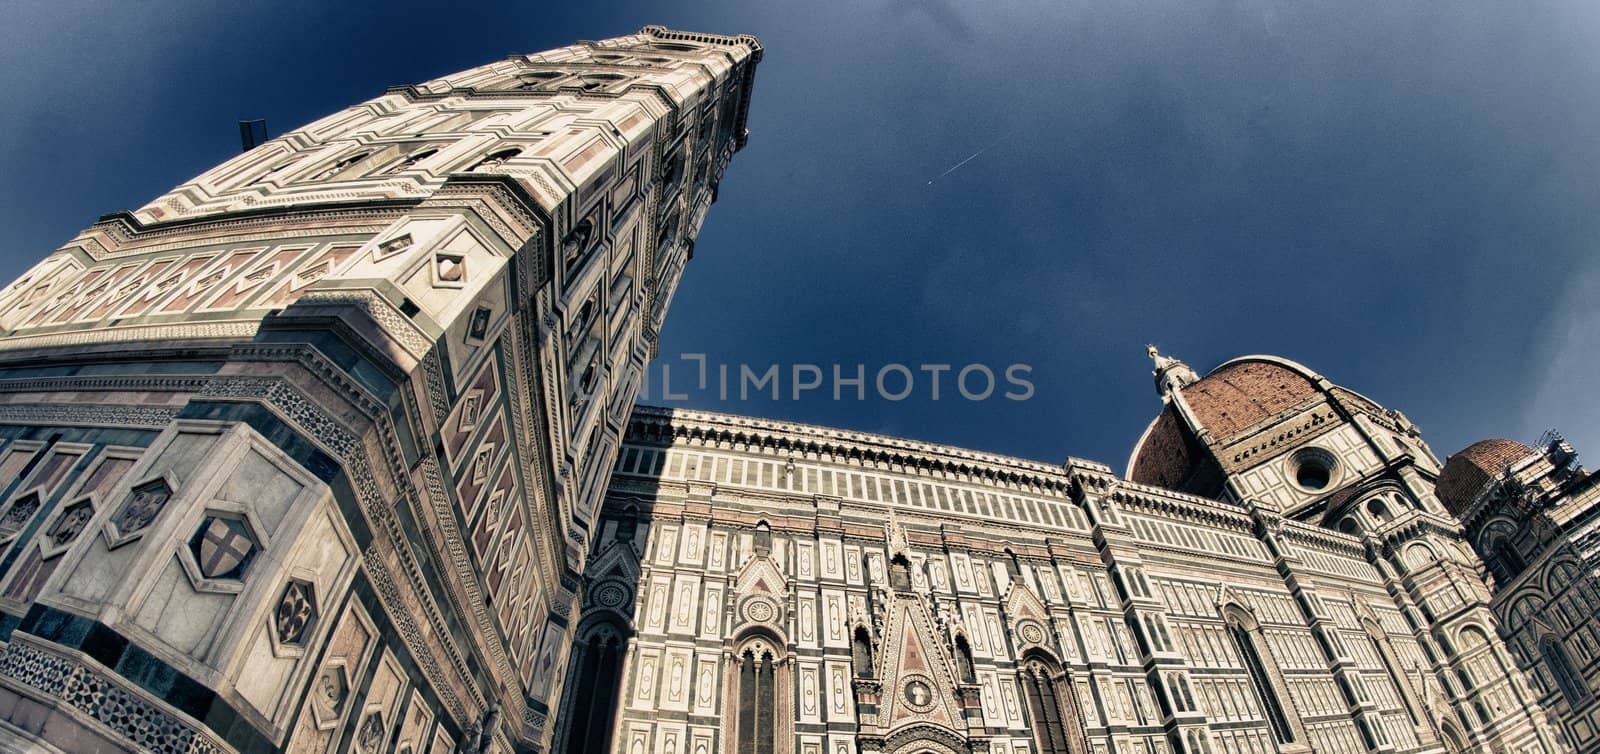 Piazza del Duomo in Florence, Italy by jovannig